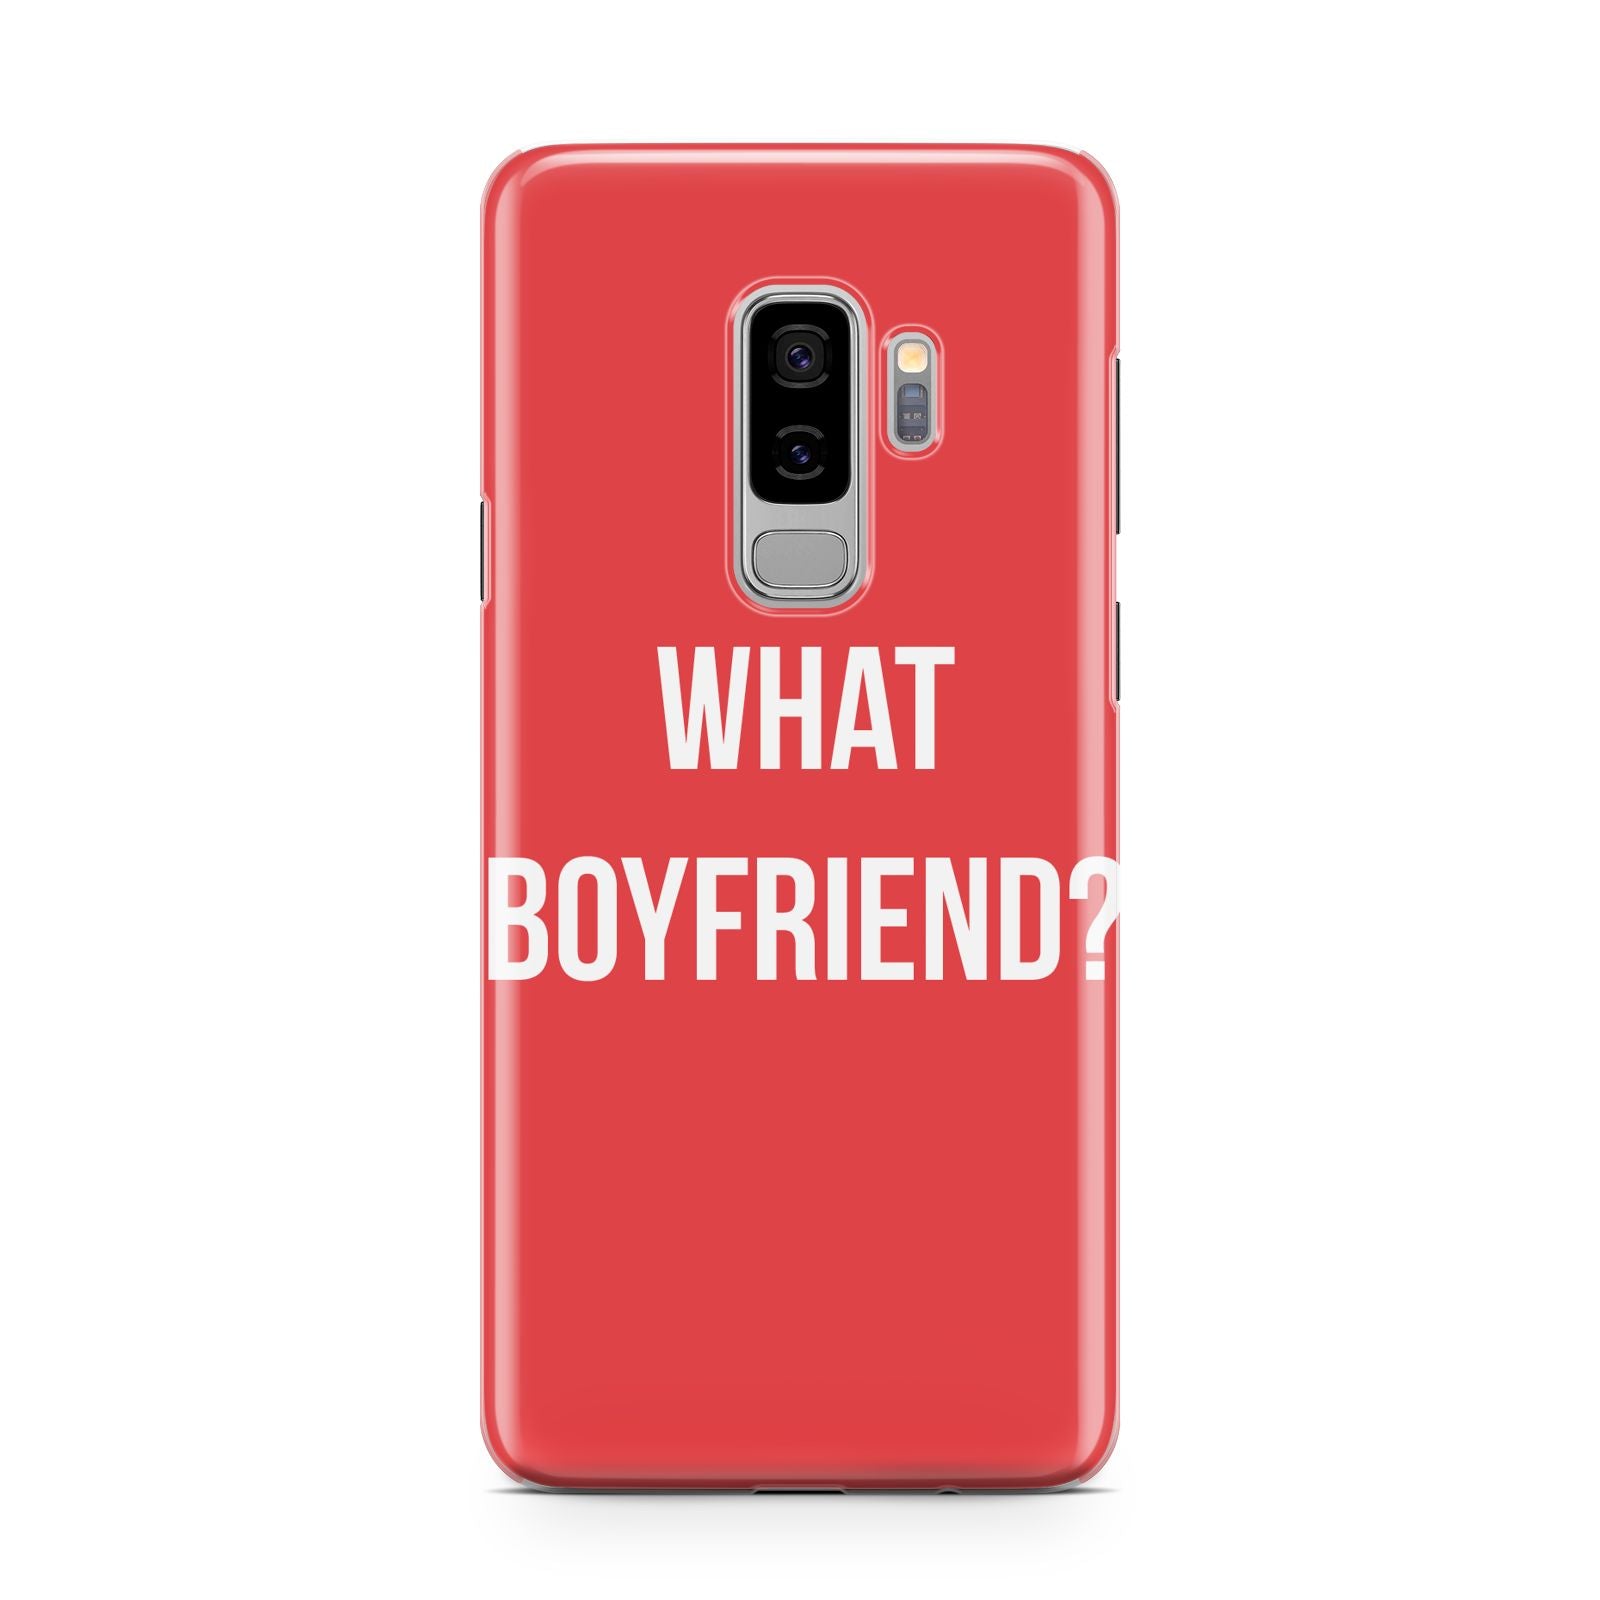 What Boyfriend Samsung Galaxy S9 Plus Case on Silver phone